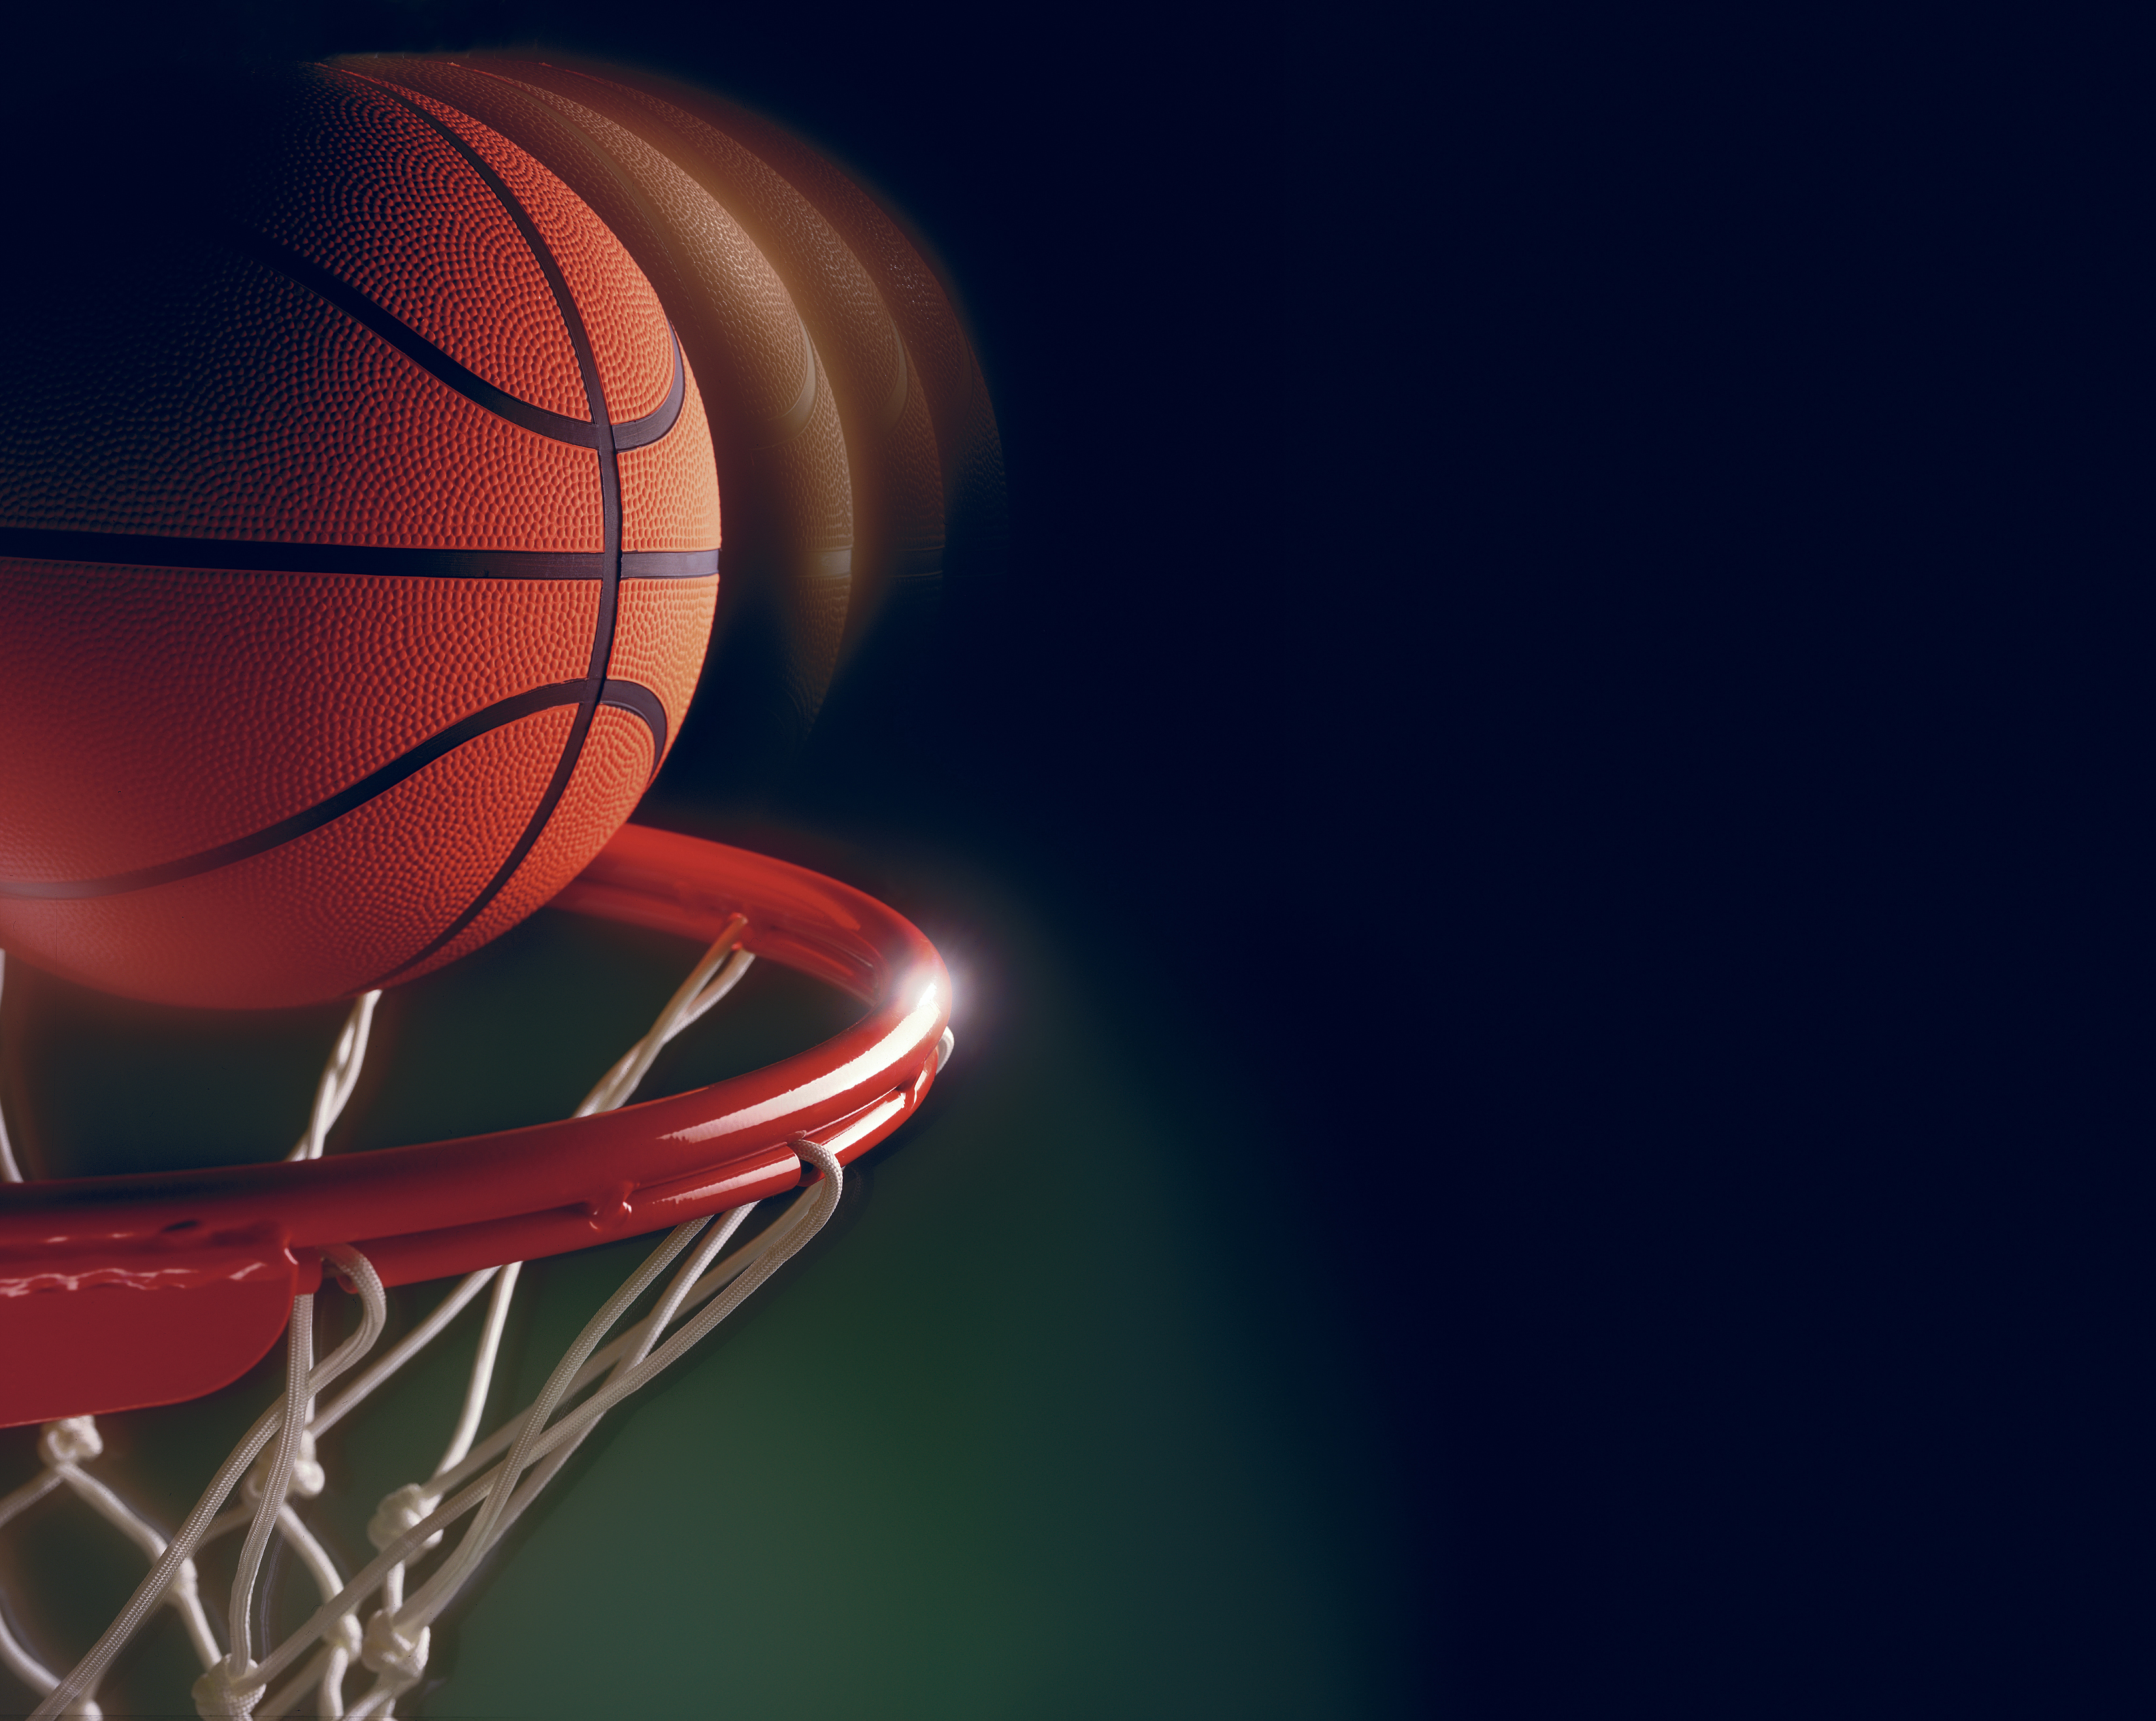 blurry basketball and hoop